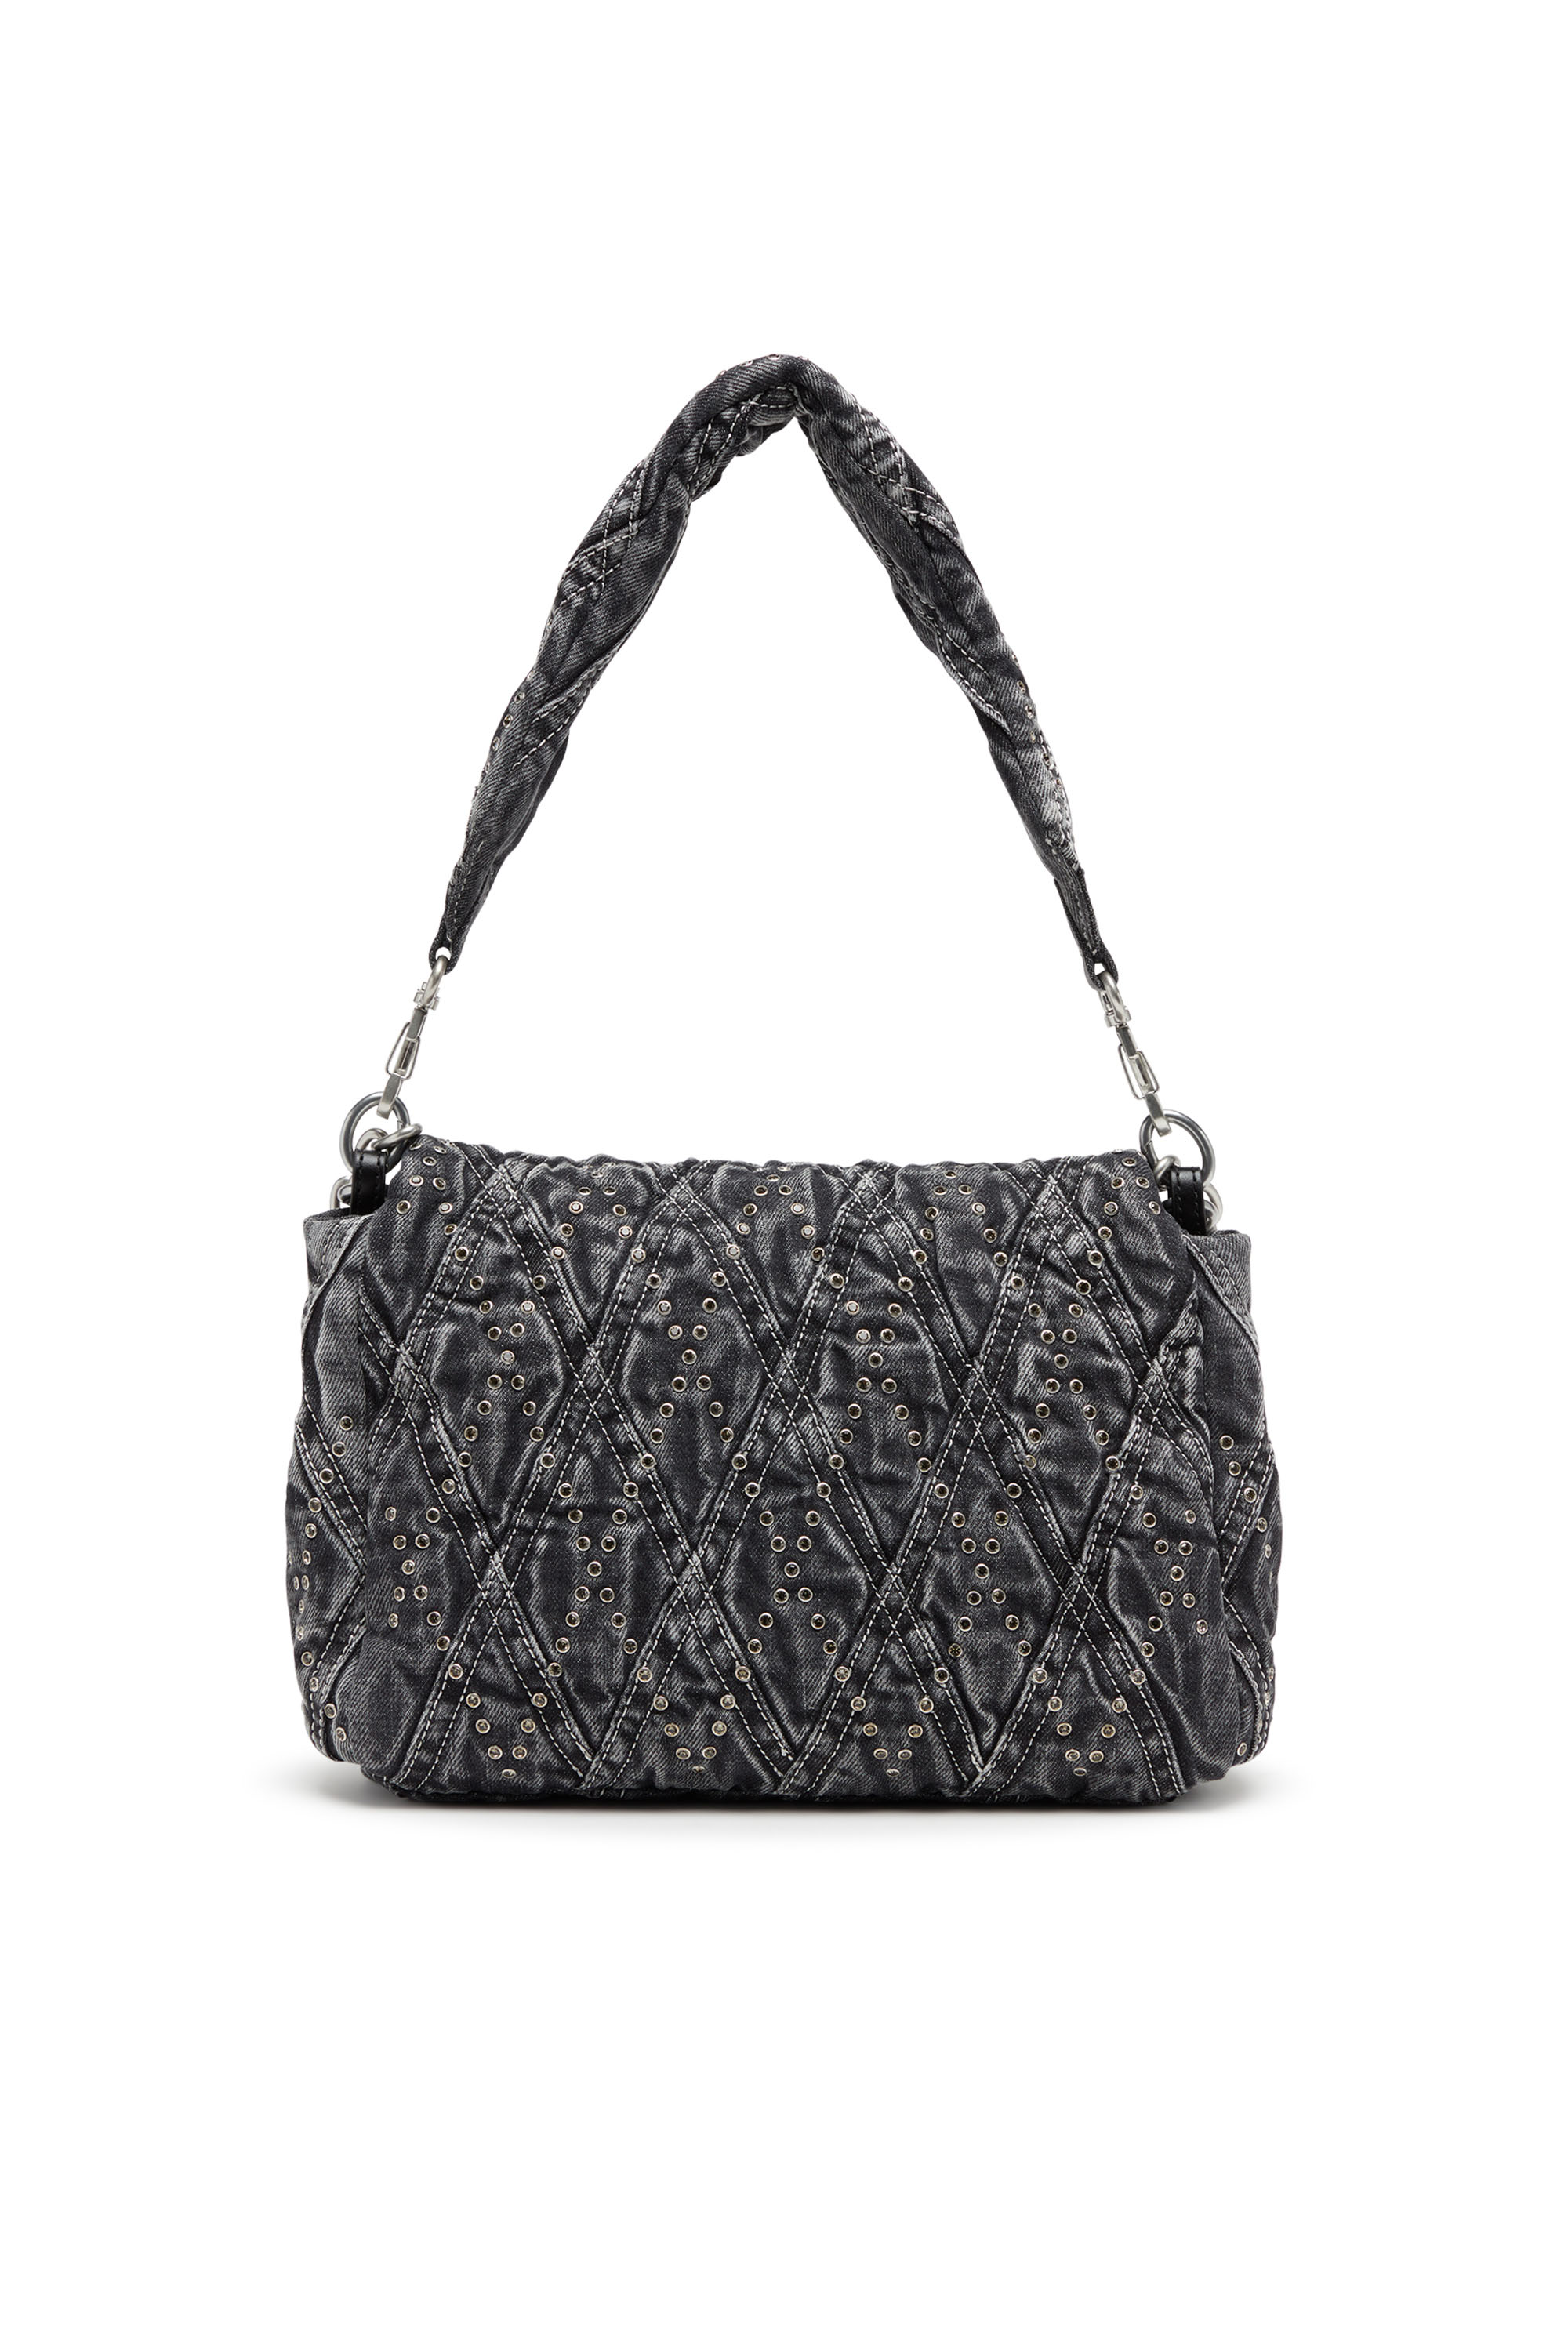 Women's Bags: Shopper, Backpacks, Travel Bags | Diesel